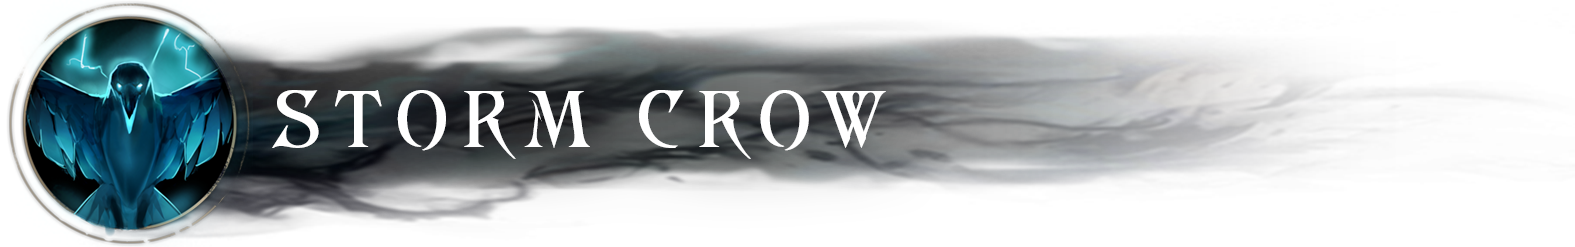 Banner StormCrow